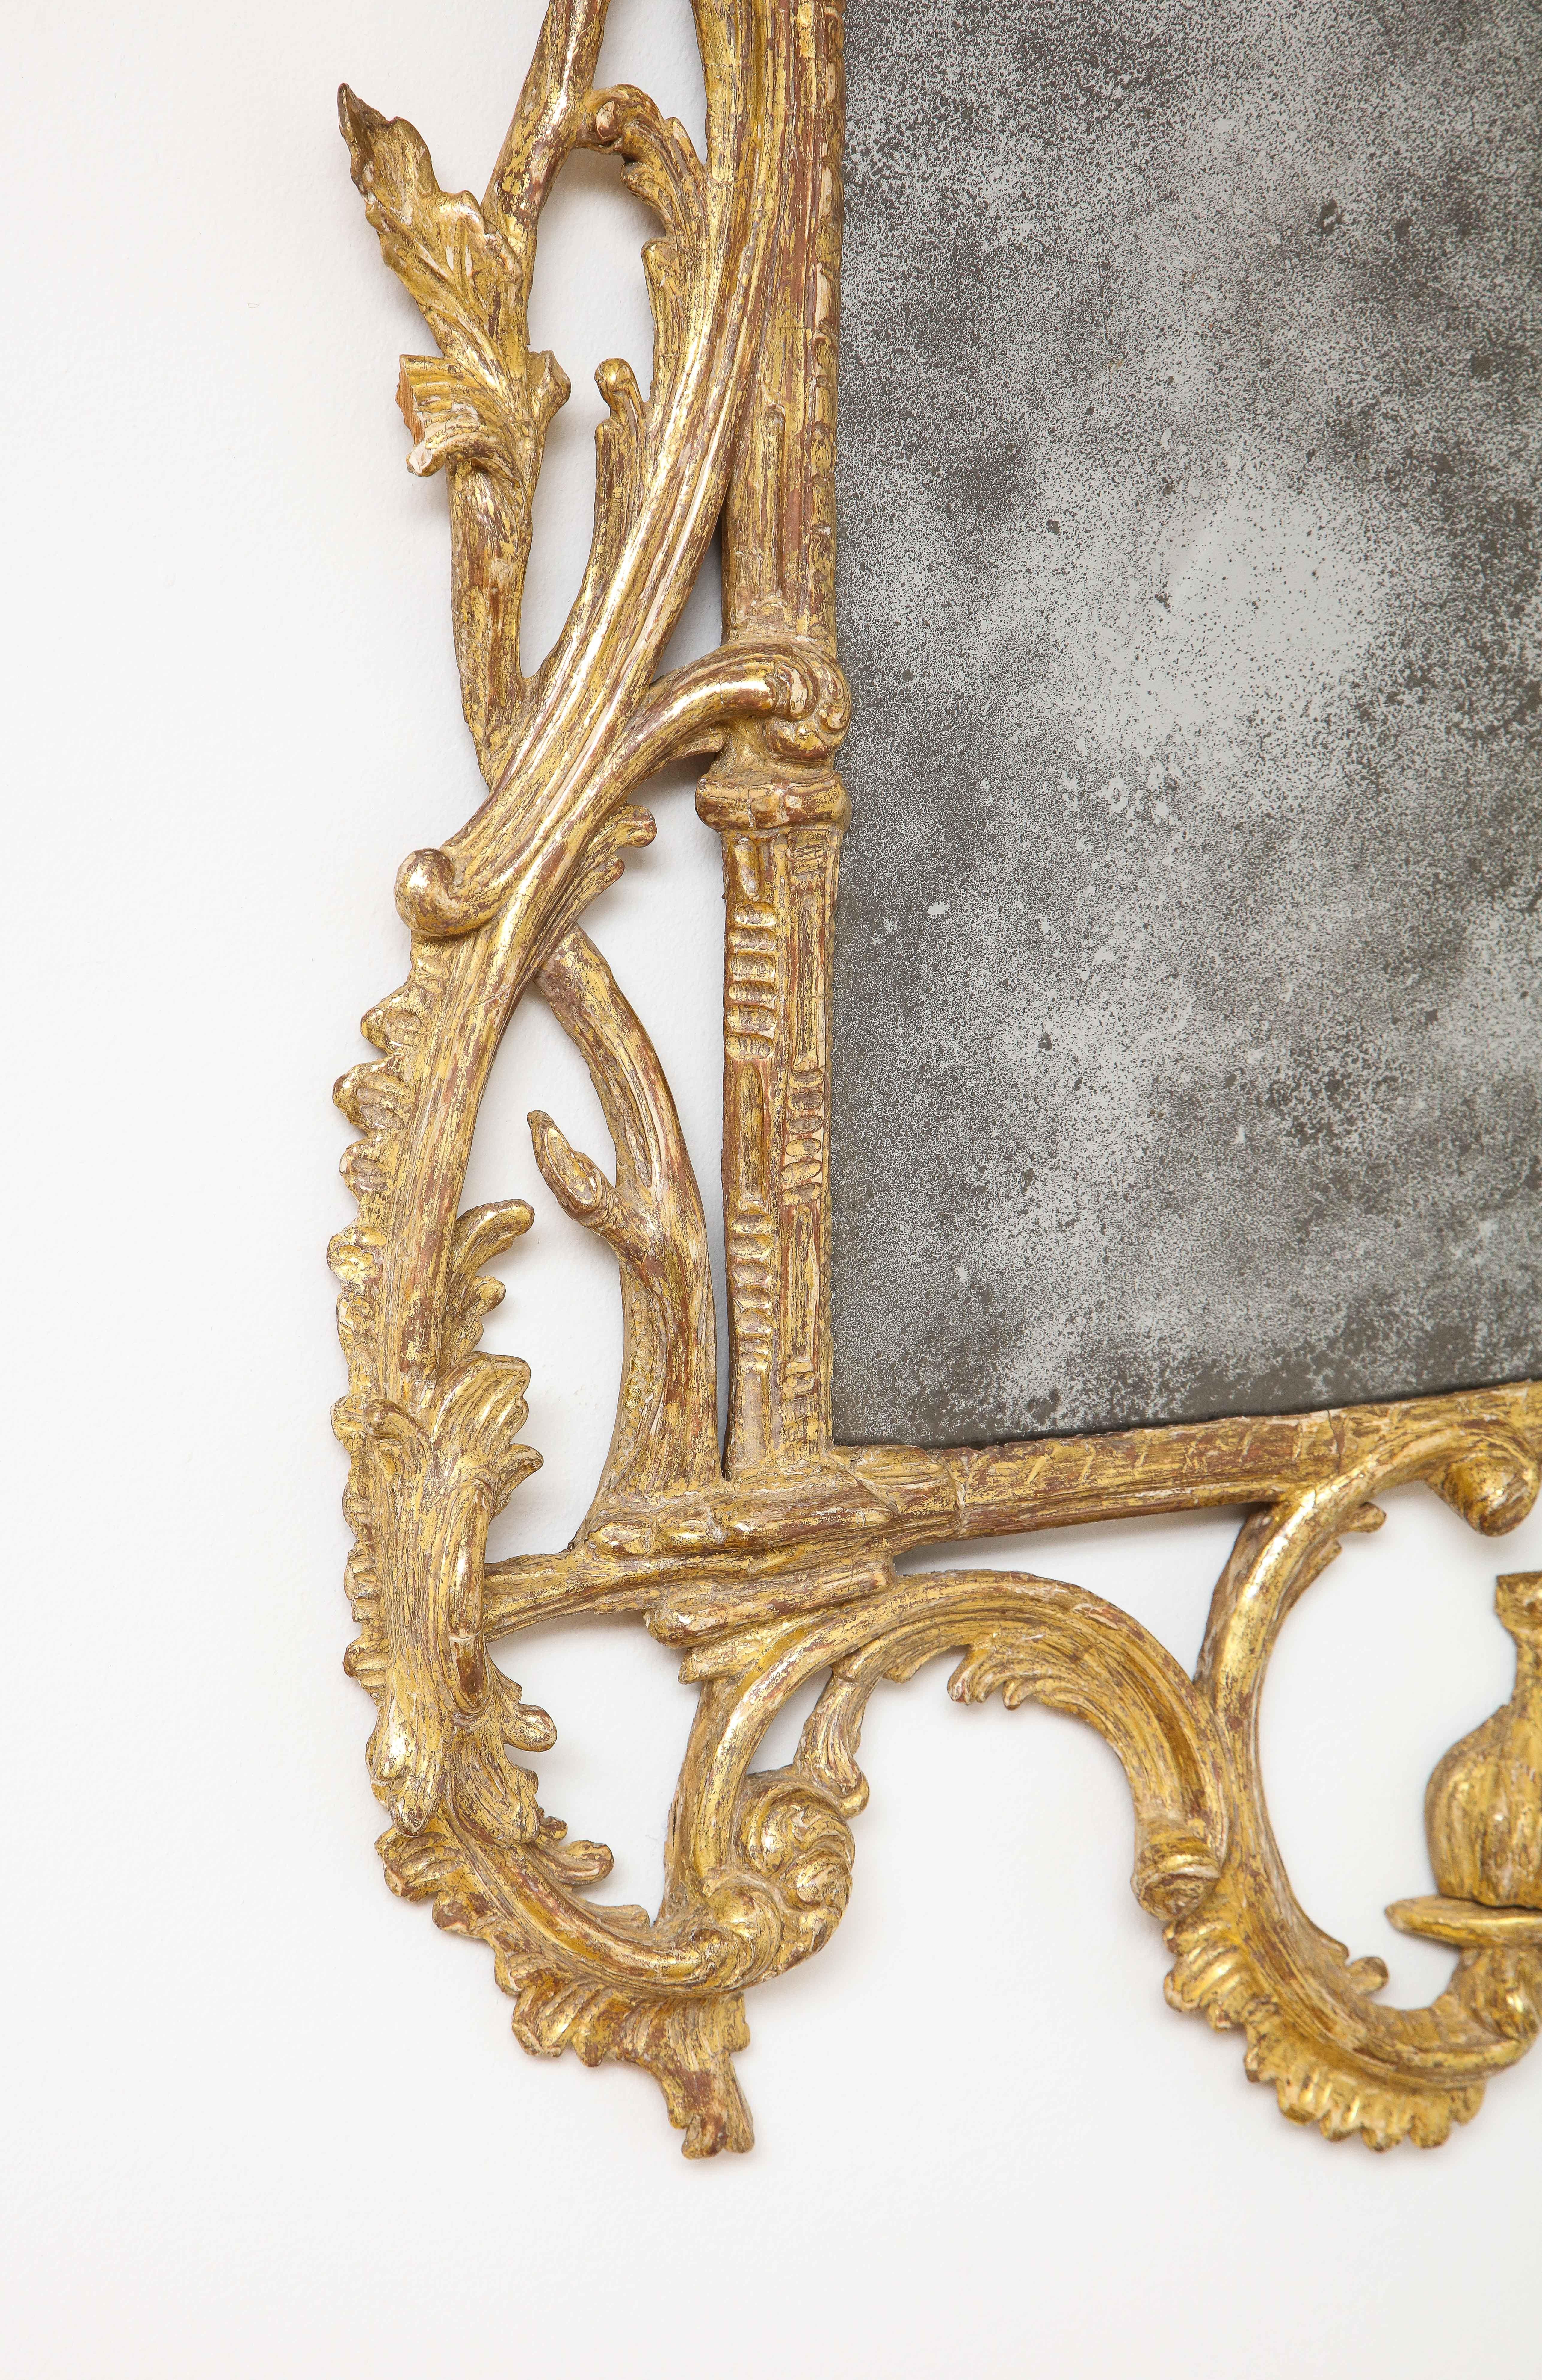 Mid-18th Century Georgian Rococo Giltwood Mirror For Sale